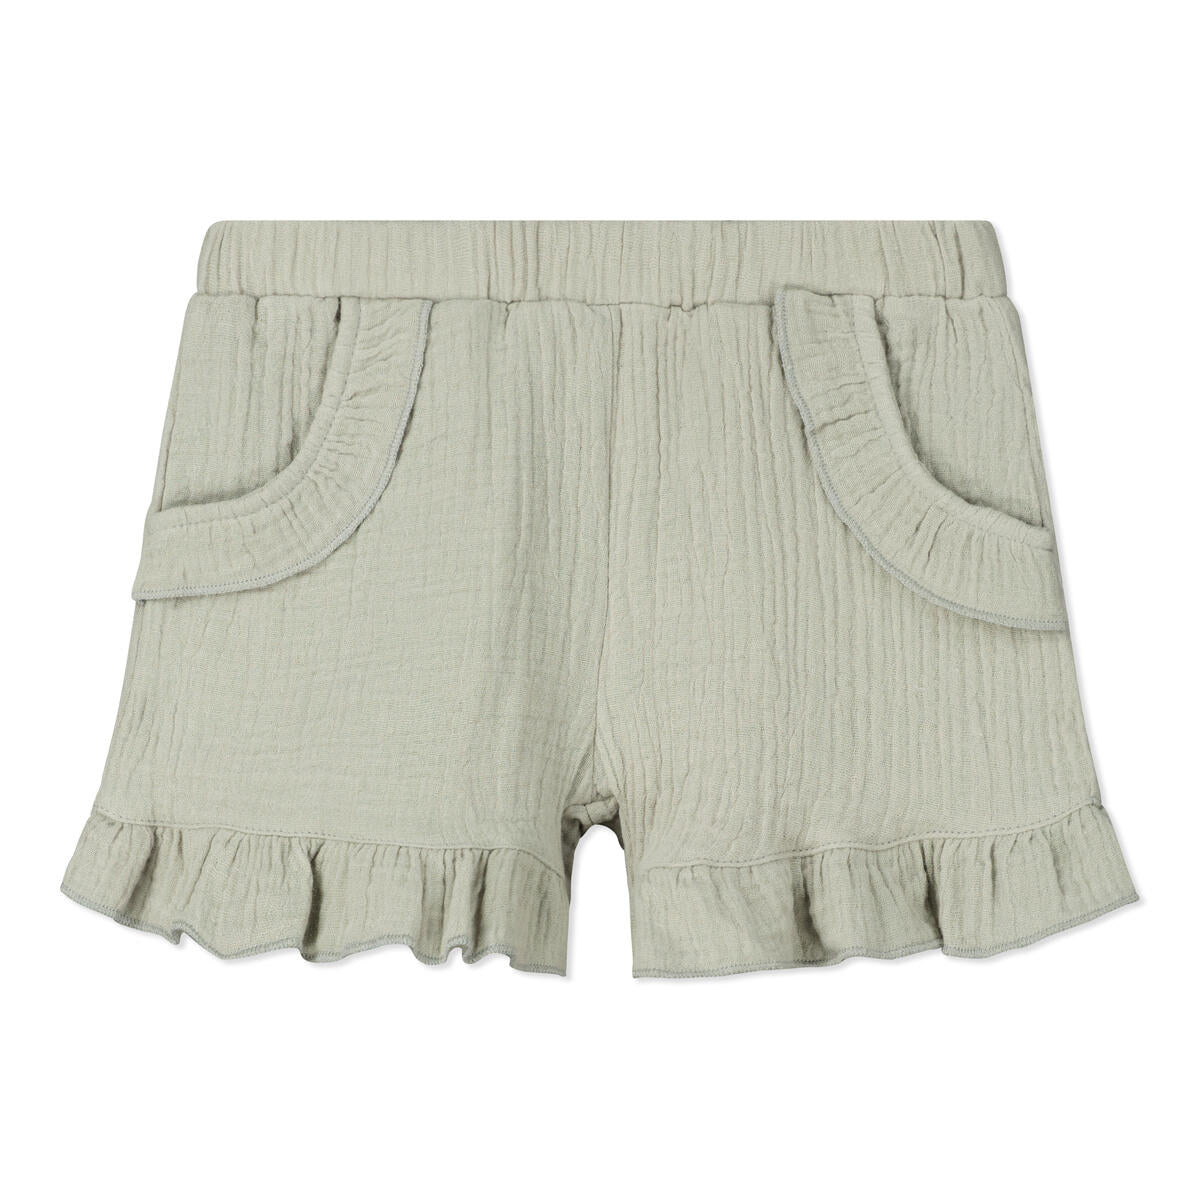 Ettie and H Lyra Grey shorts, little girl, baby girl, dressy, cotton linen blend, elastic waste